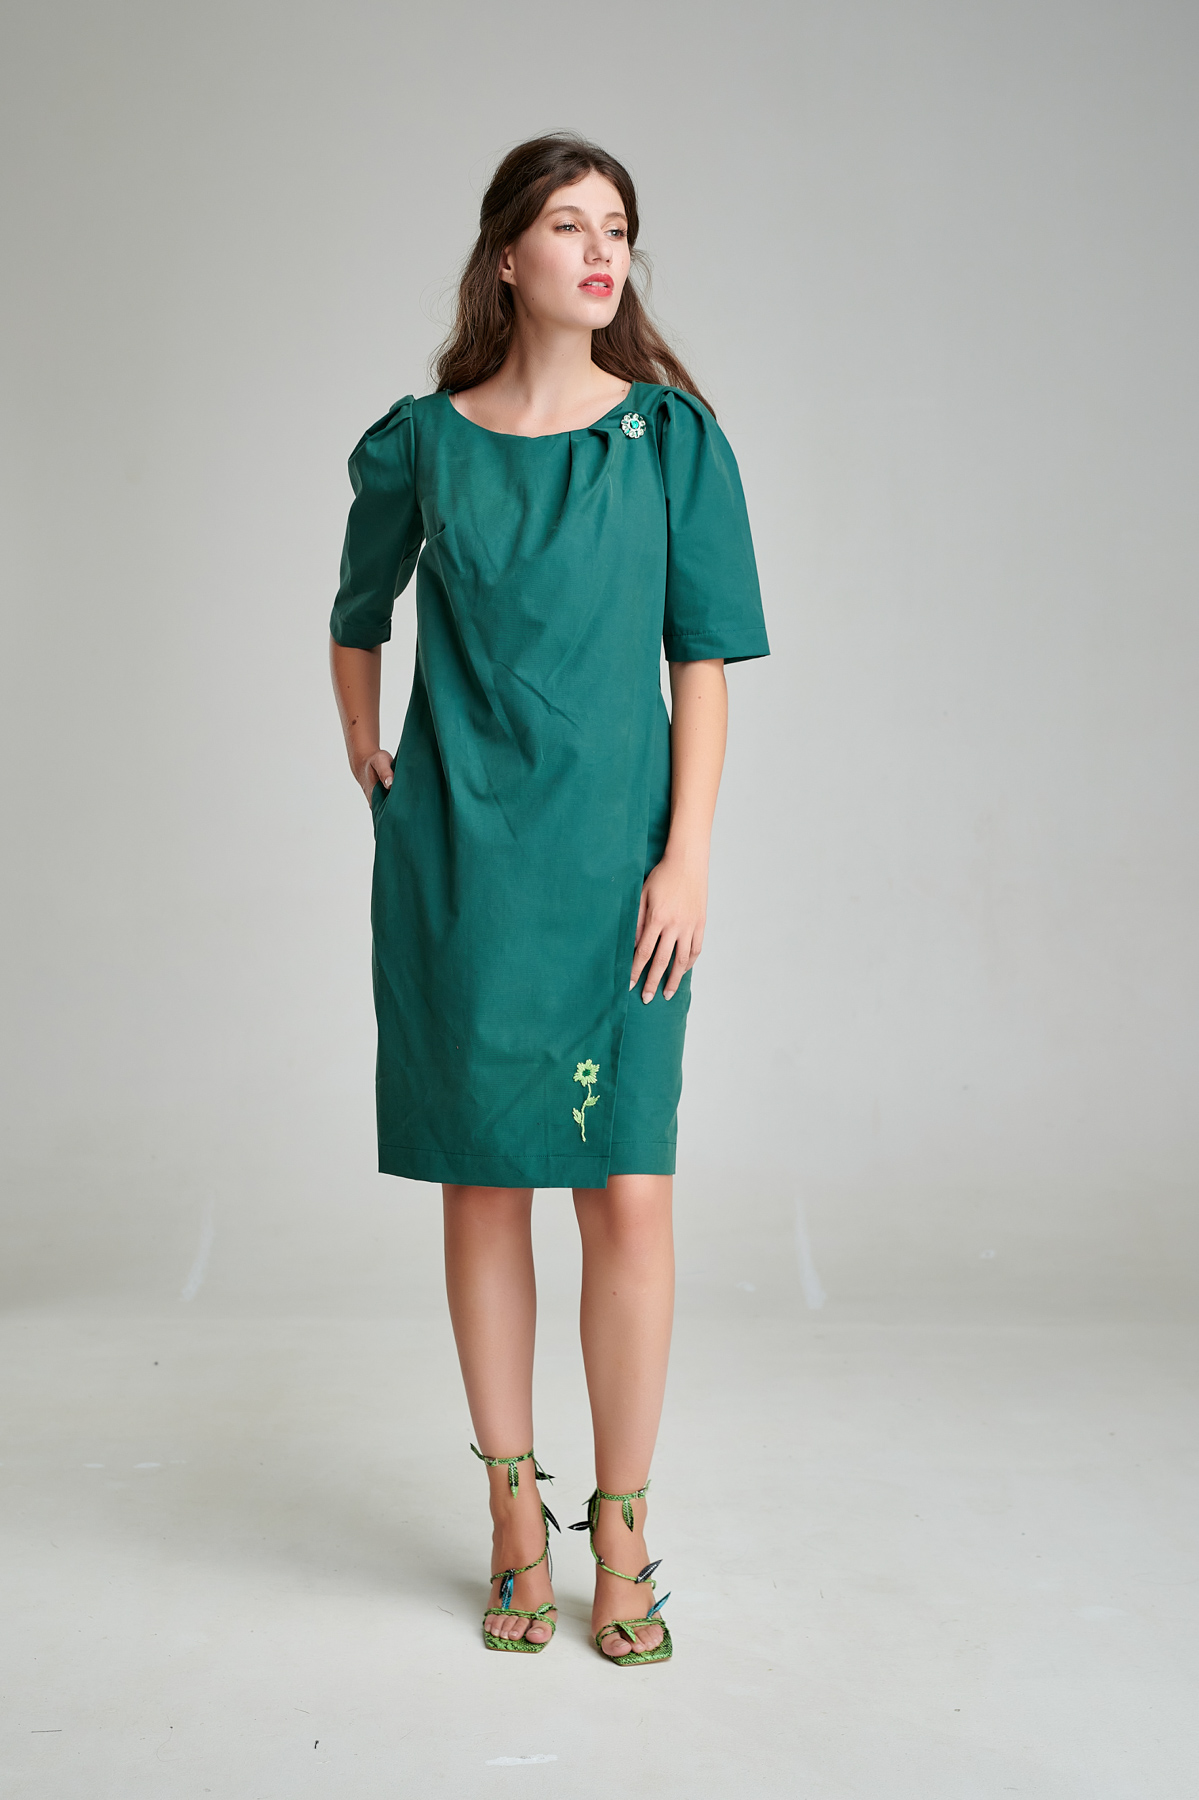 OLIVIER emerald green dress. Natural fabrics, original design, handmade embroidery